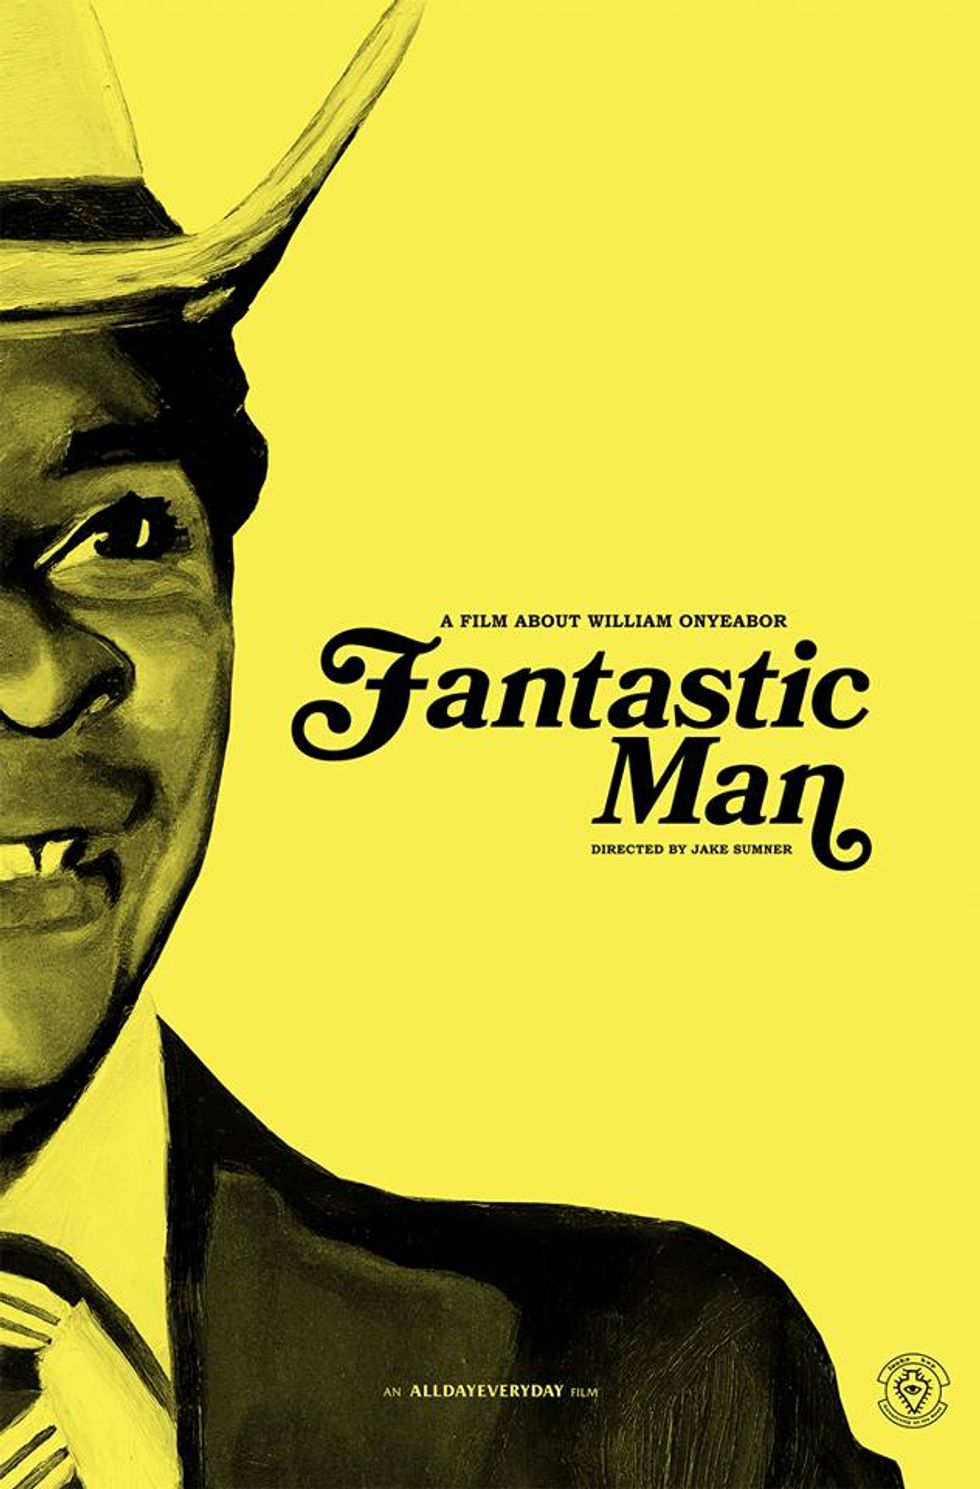 Watch The William Onyeabor 'Fantastic Man' Documentary Featuring Femi Kuti, Damon Albarn, Caribou + More